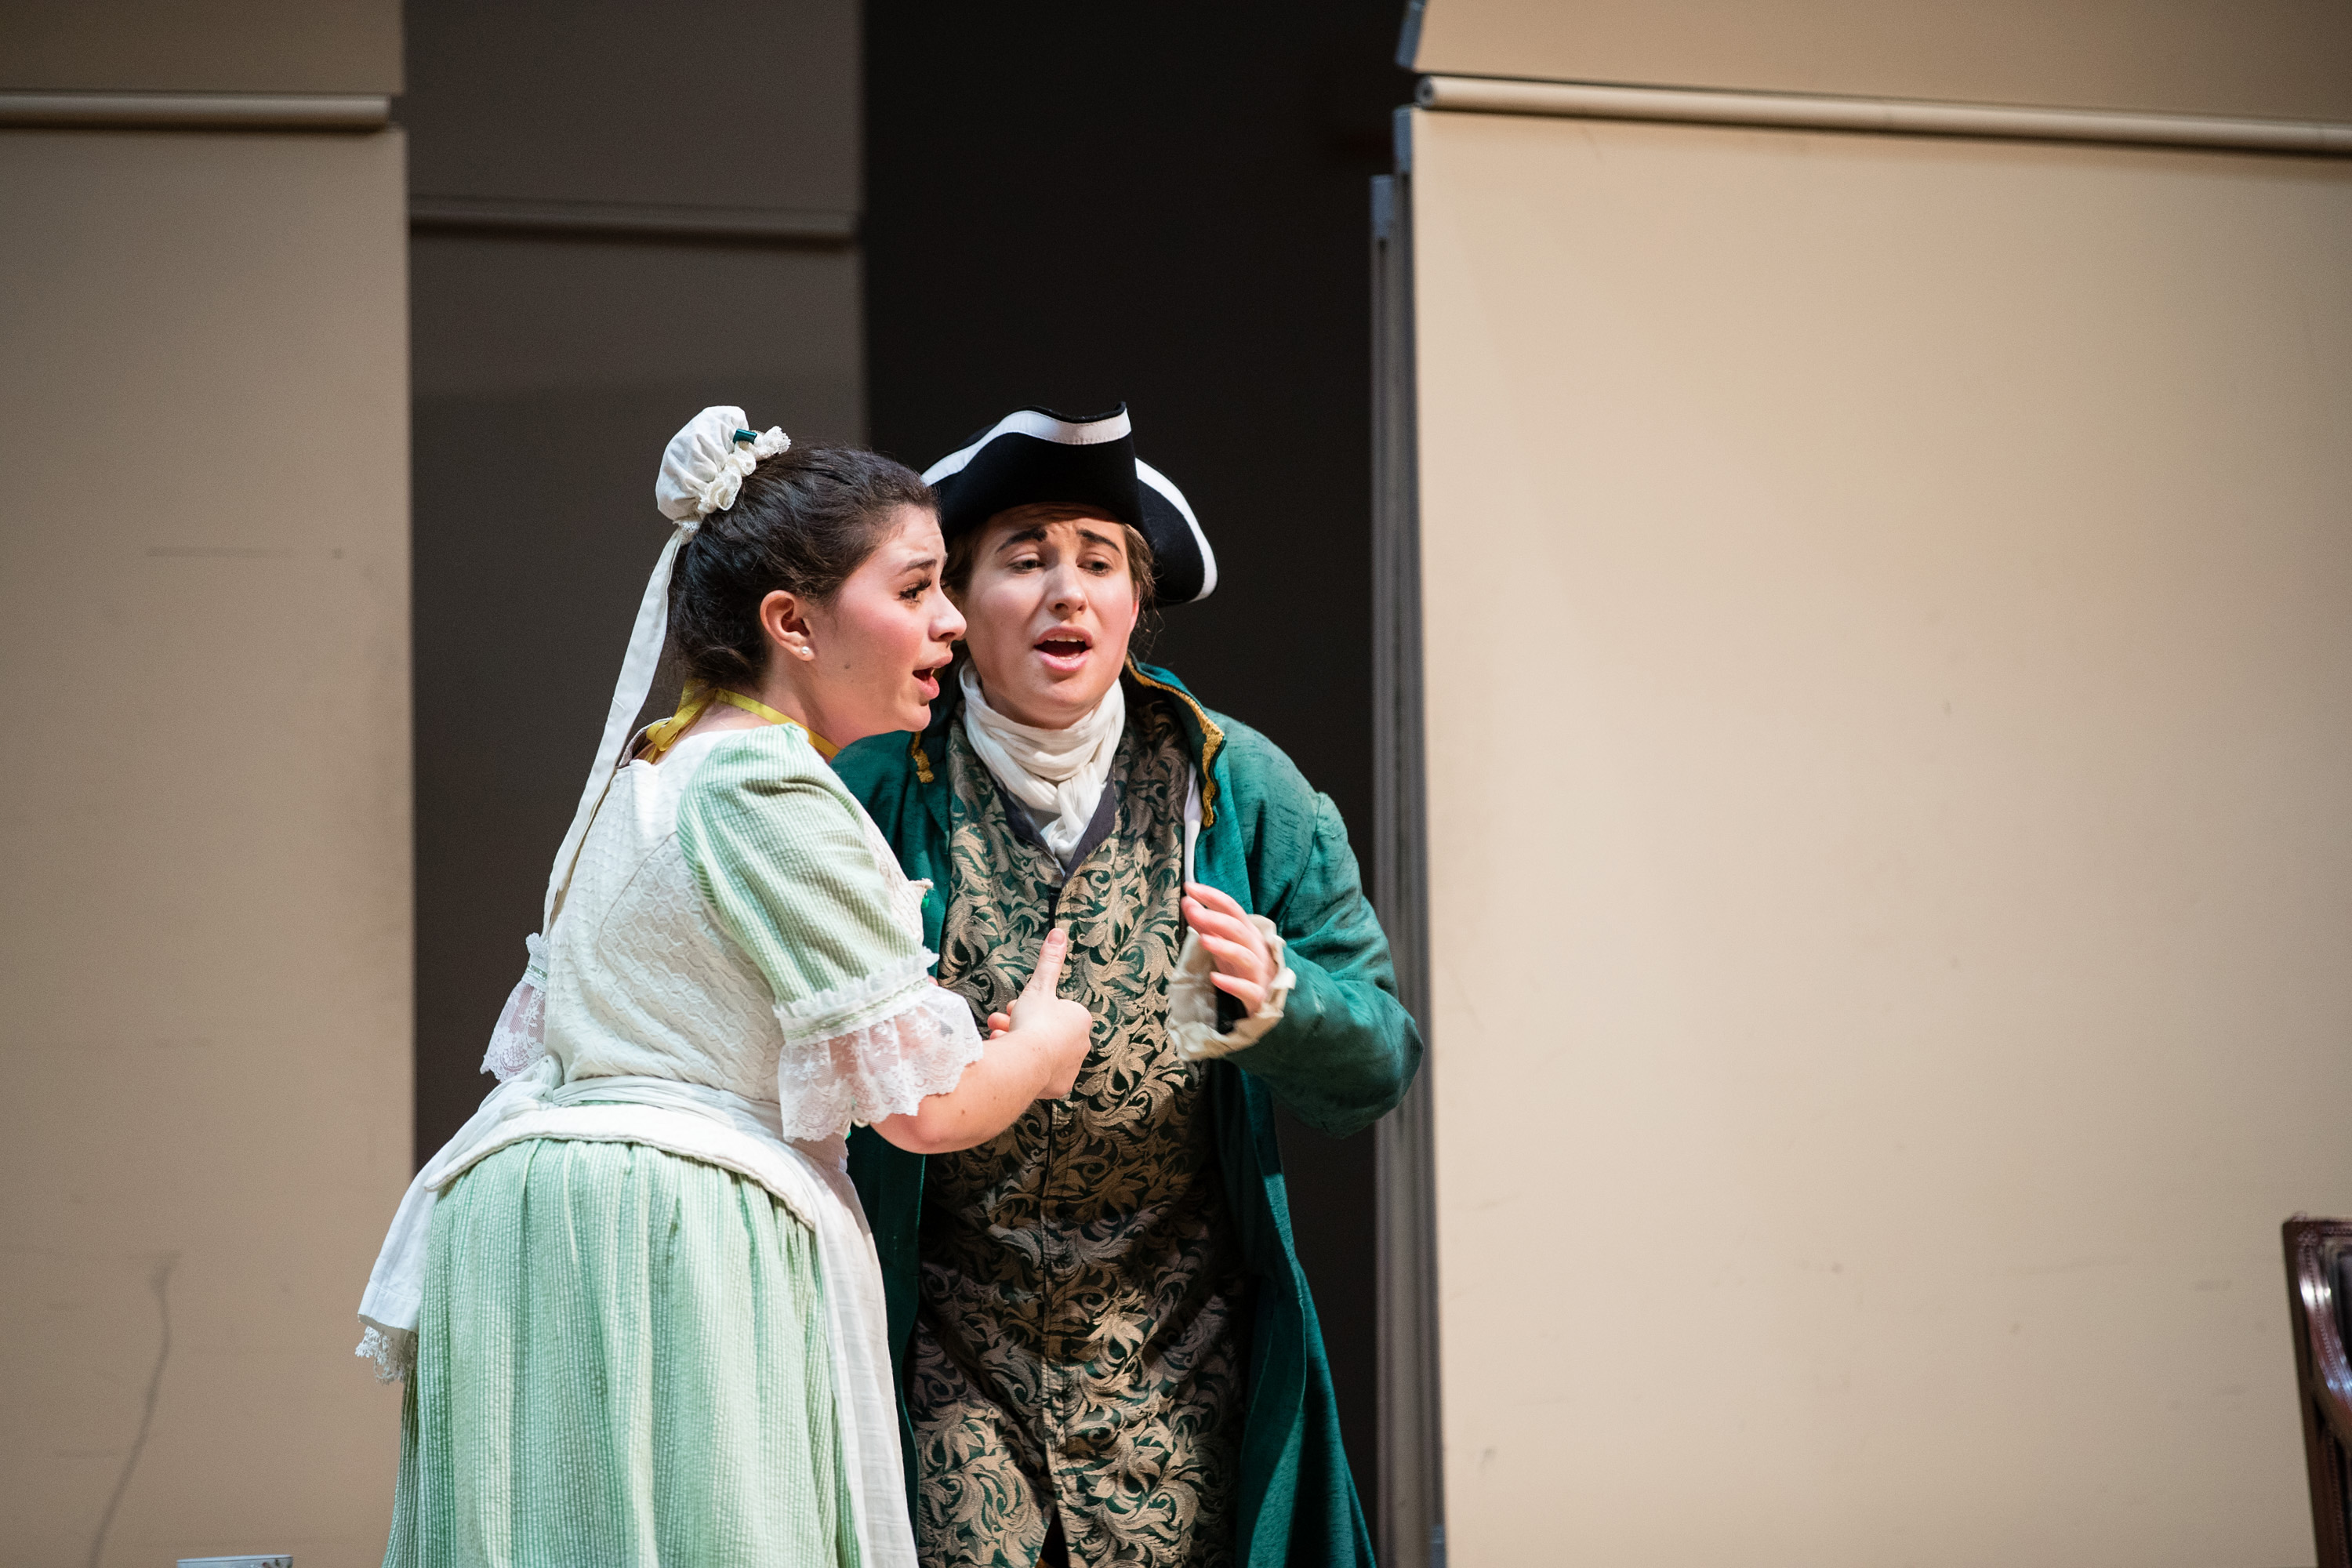 Le Nozze di Figaro, Act II, Skidmore College Opera Workshop, Saratoga Springs, New York, 2019